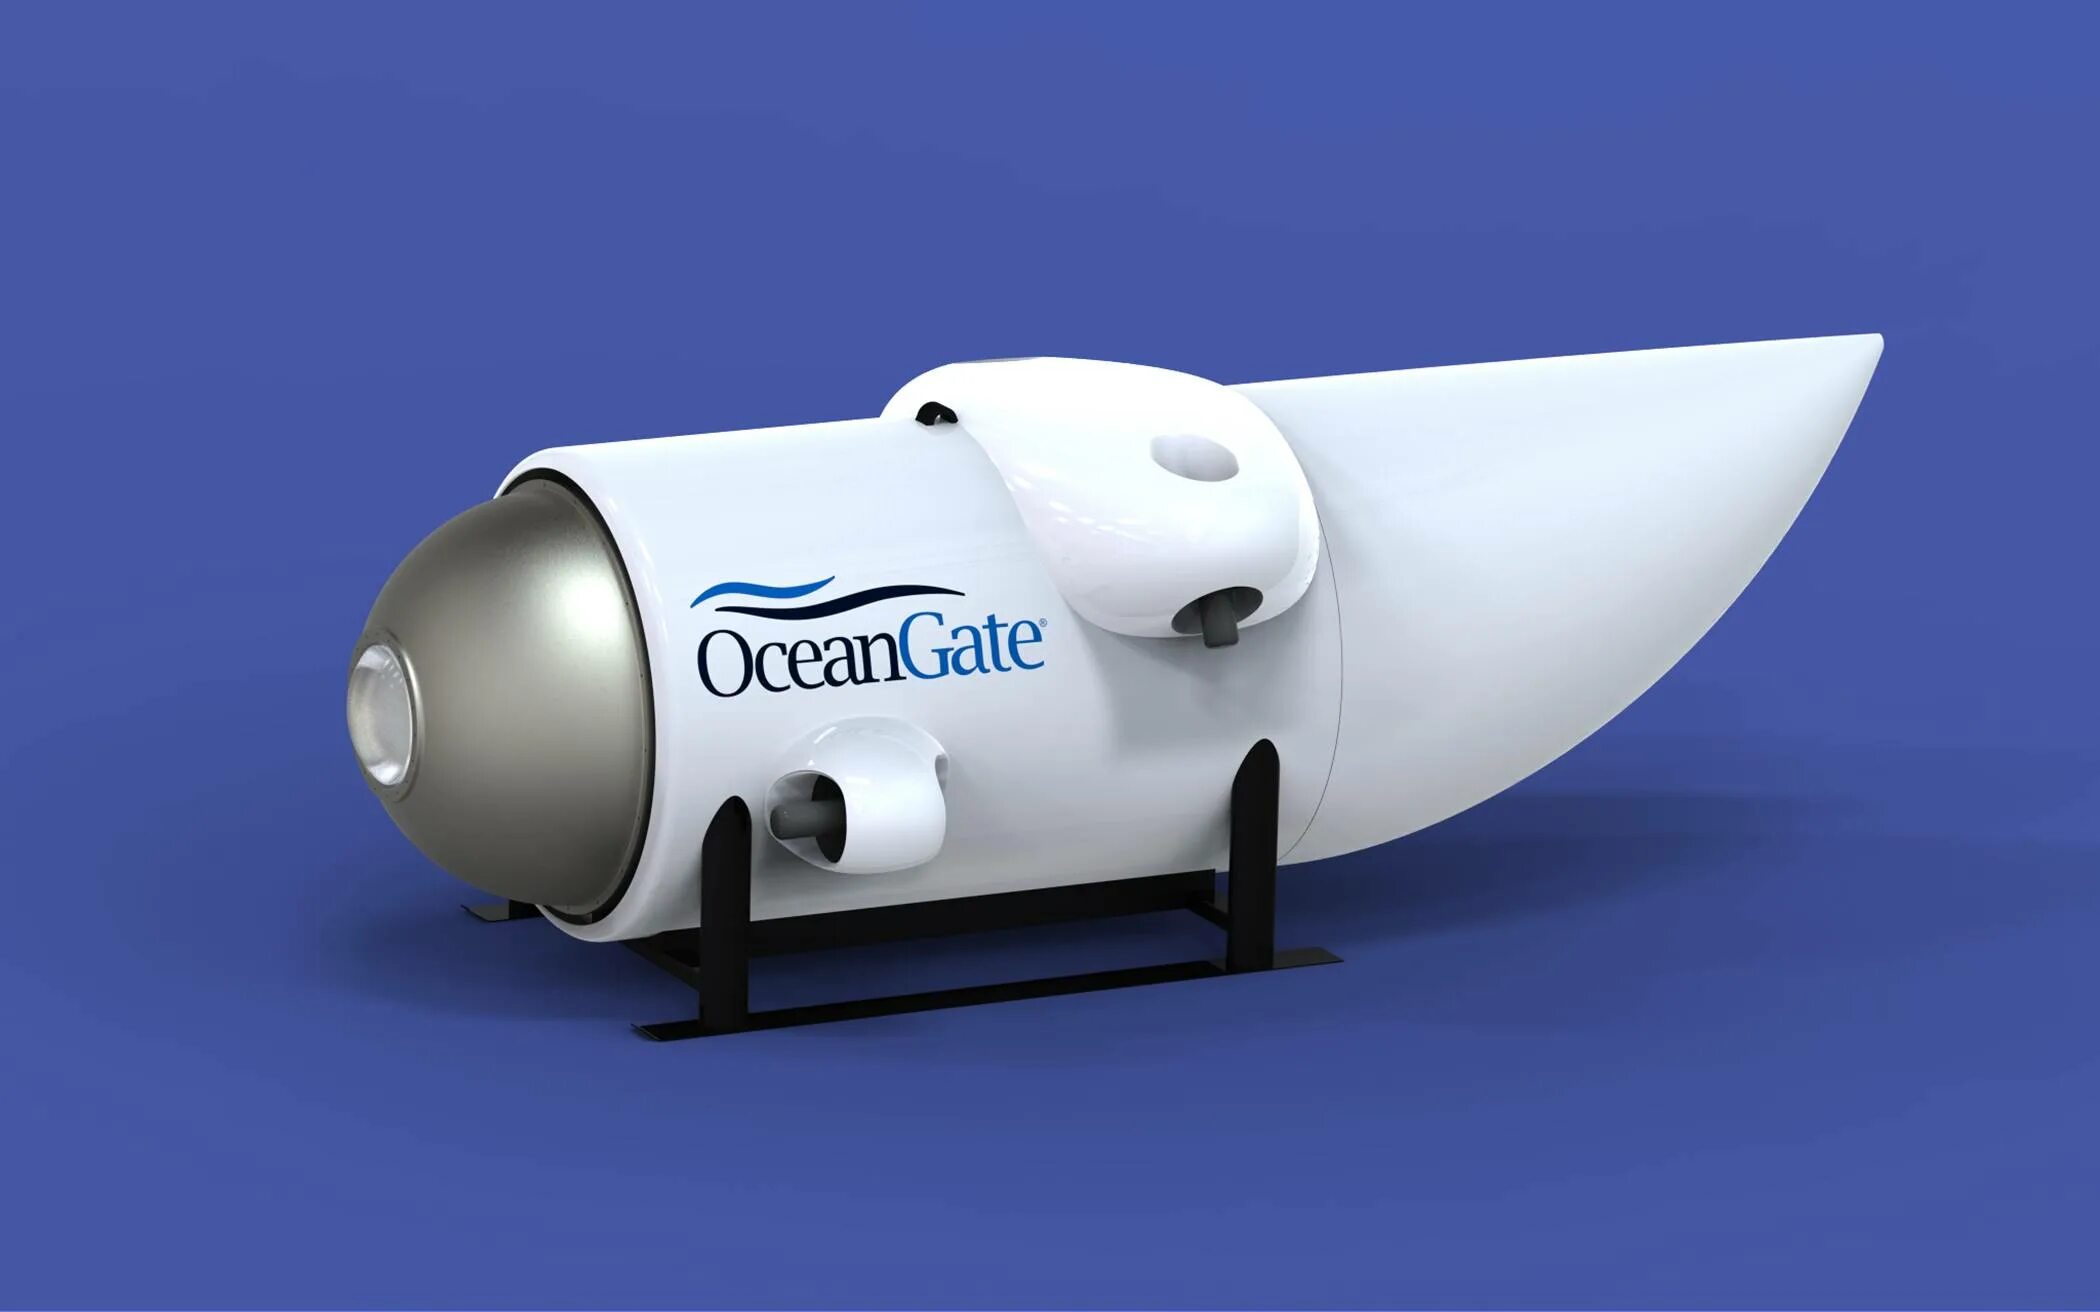 Батискаф Титан OCEANGATE. OCEANGATE Cyclops. Подводный аппарат Титан компании OCEANGATE. OCEANGATE Titan (Cyclop 2) субмарина. Oceangate